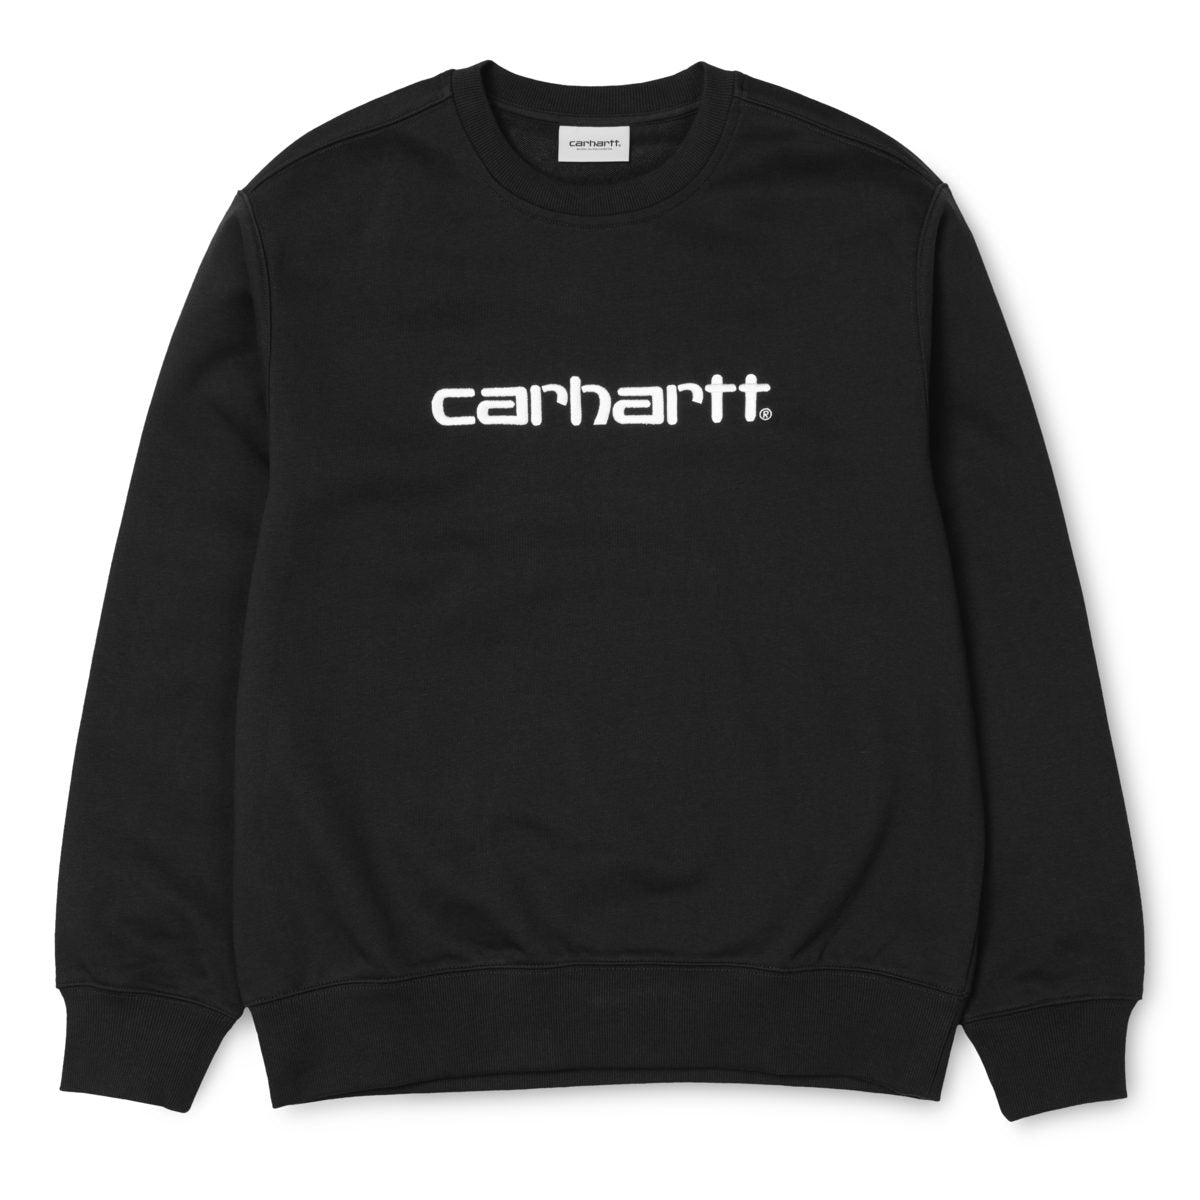 Carhartt Black/White Sweater